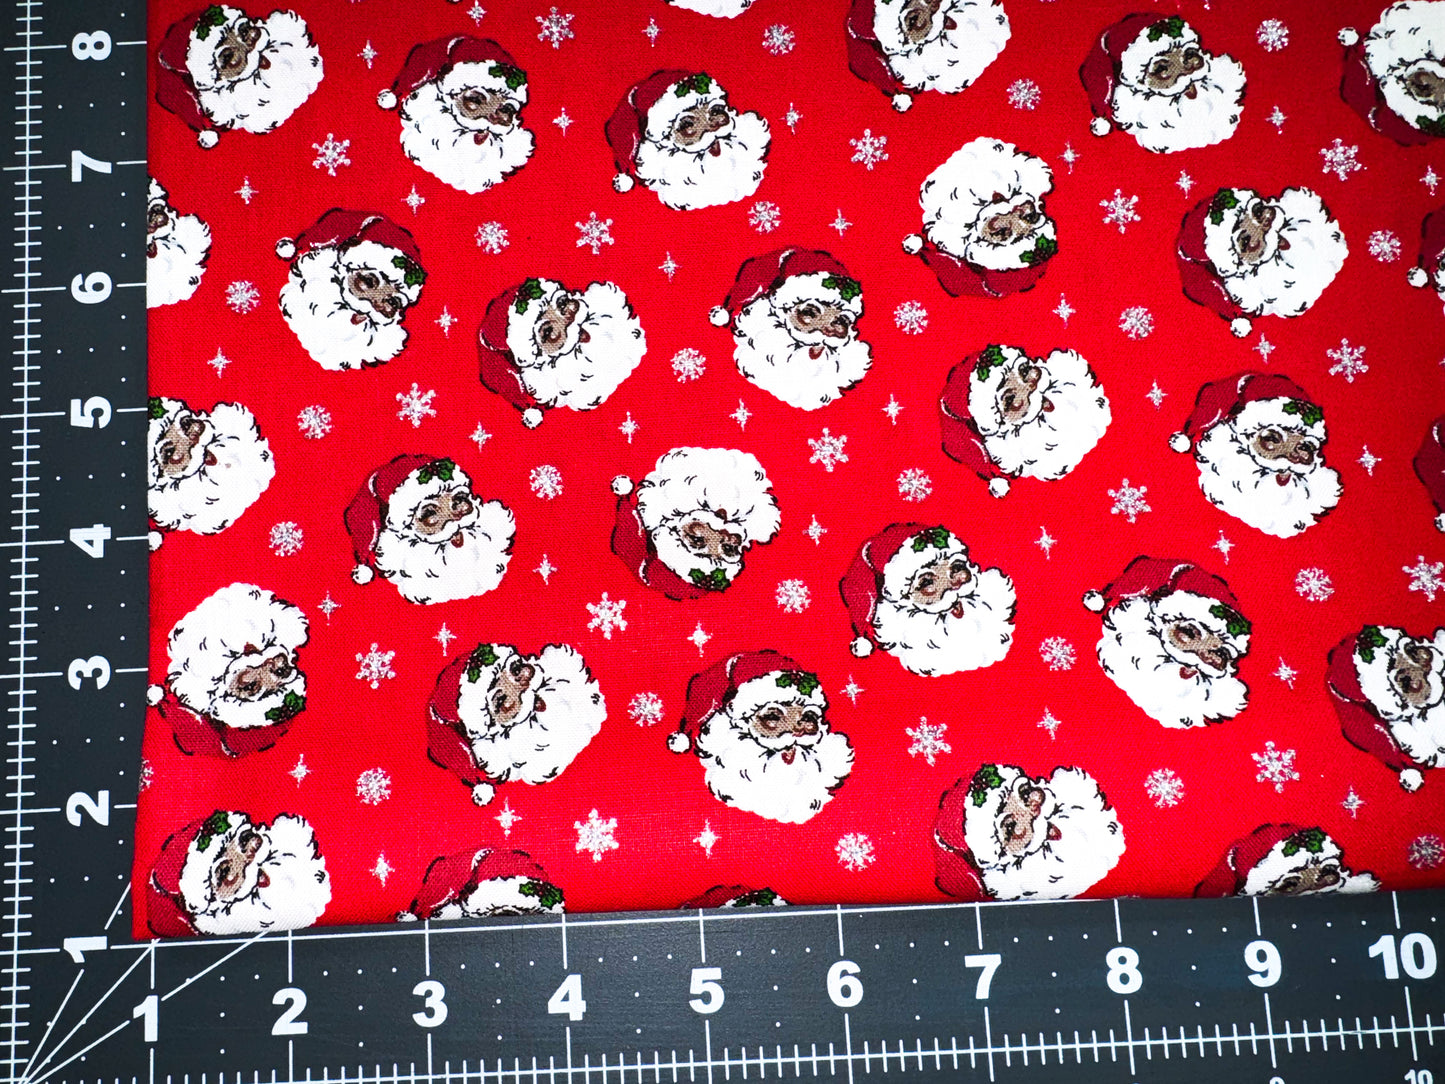 Snowflakes and Santa Claus fabric vintage Christmas cotton fabric